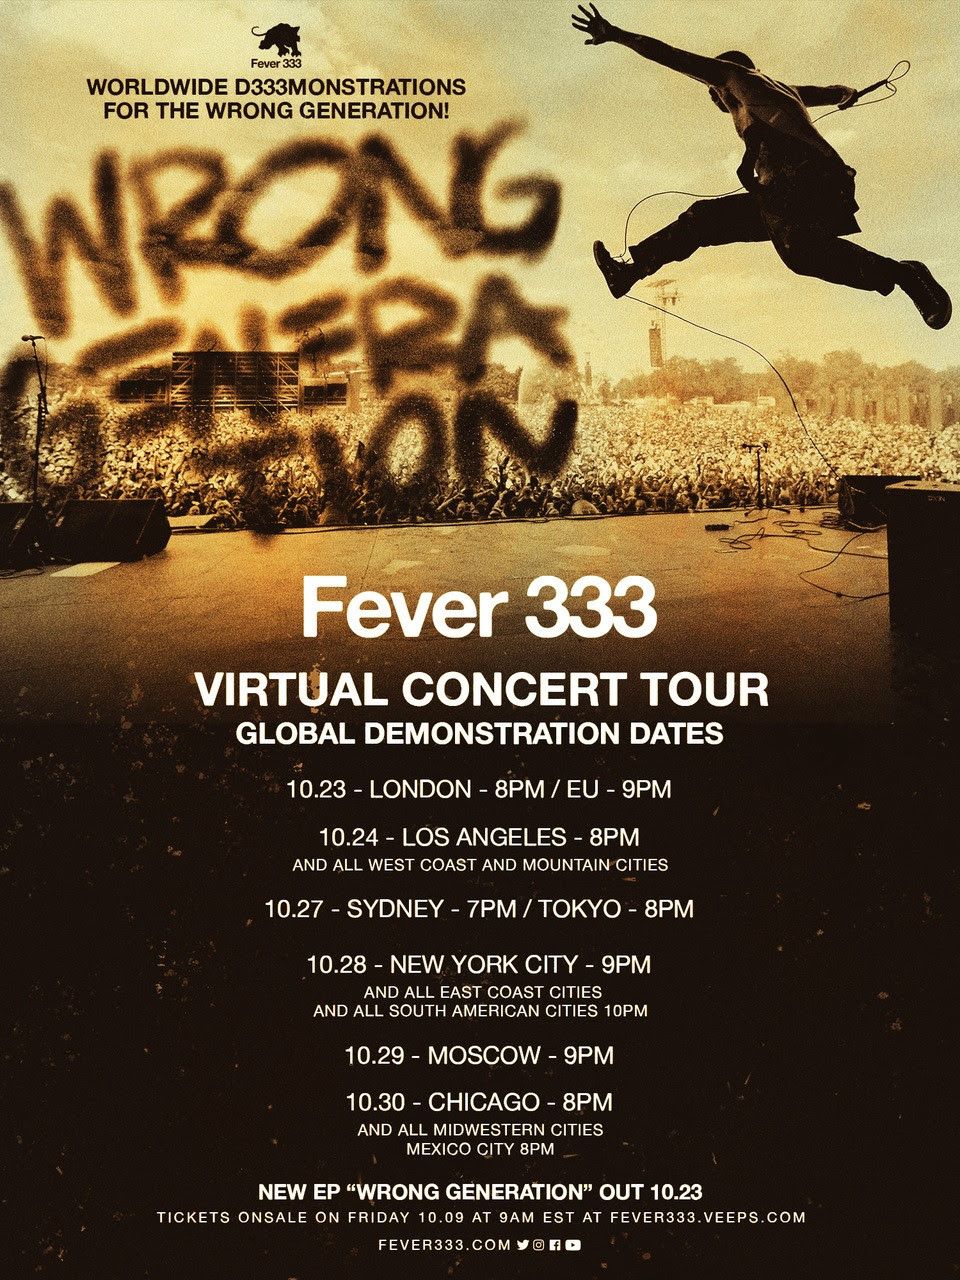 Neue EP "Wrong Generation" und globale Livestream-Tour angekündigt